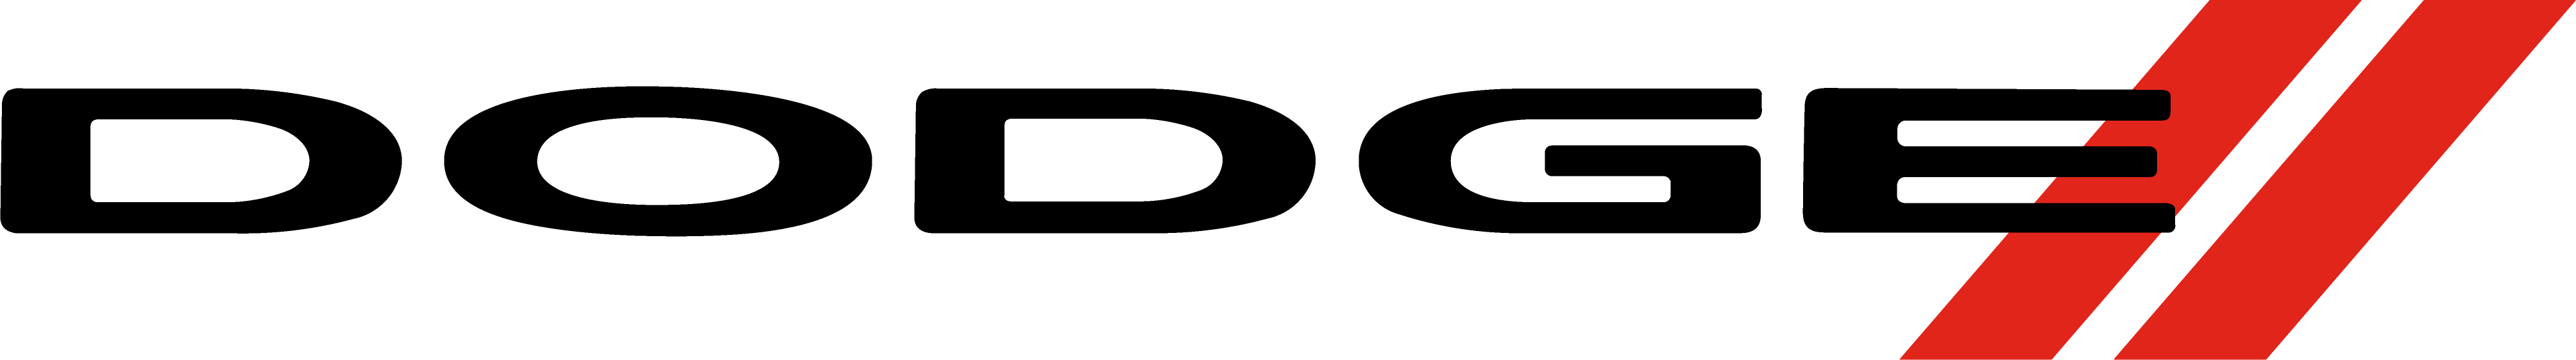 image de Dodge logo